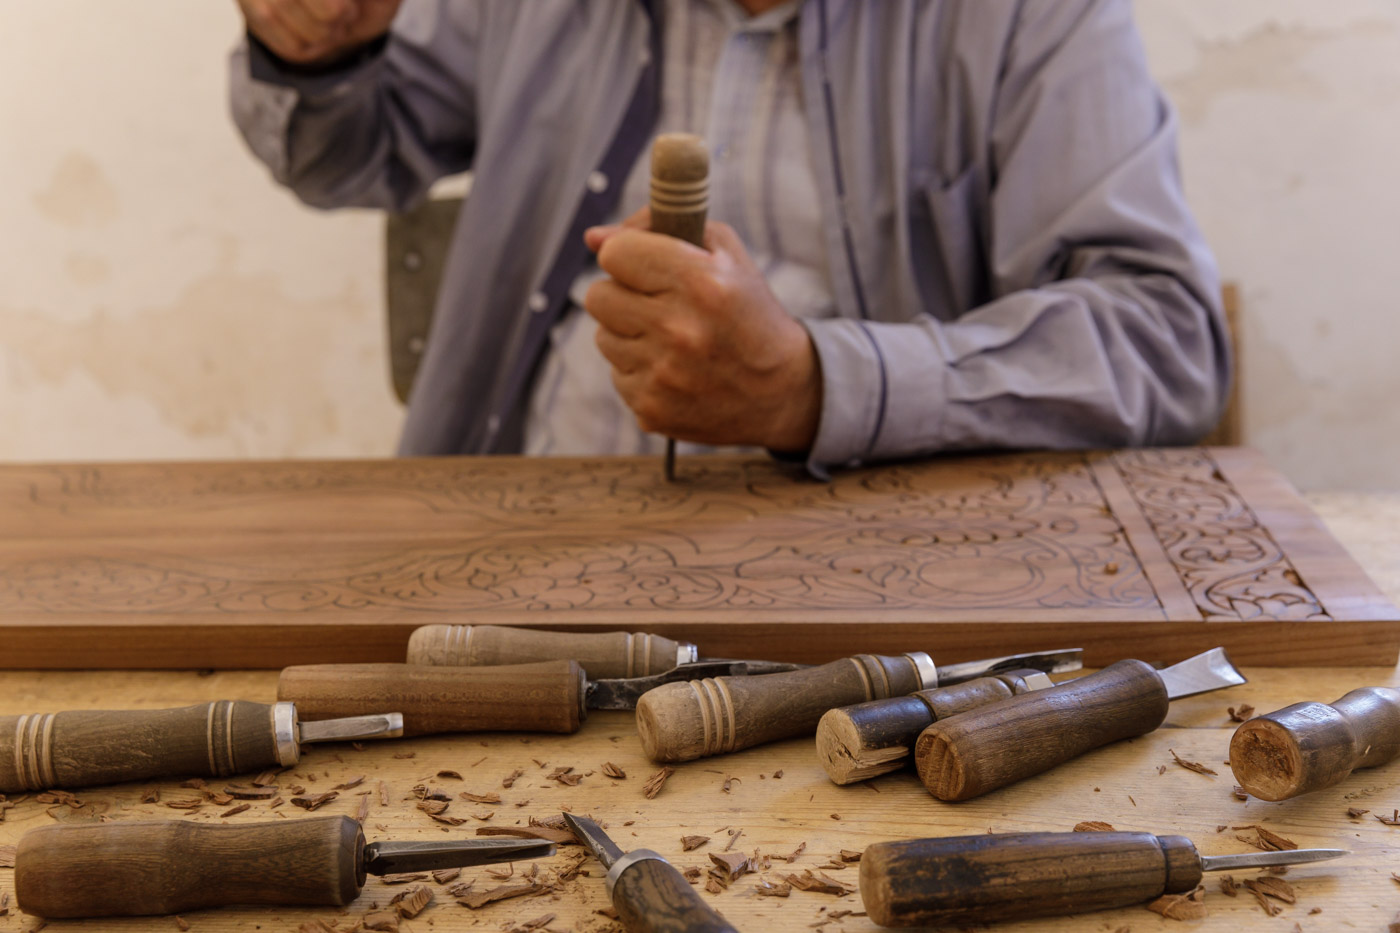 Uzbek woodworker in Khiva, Uzbekistan